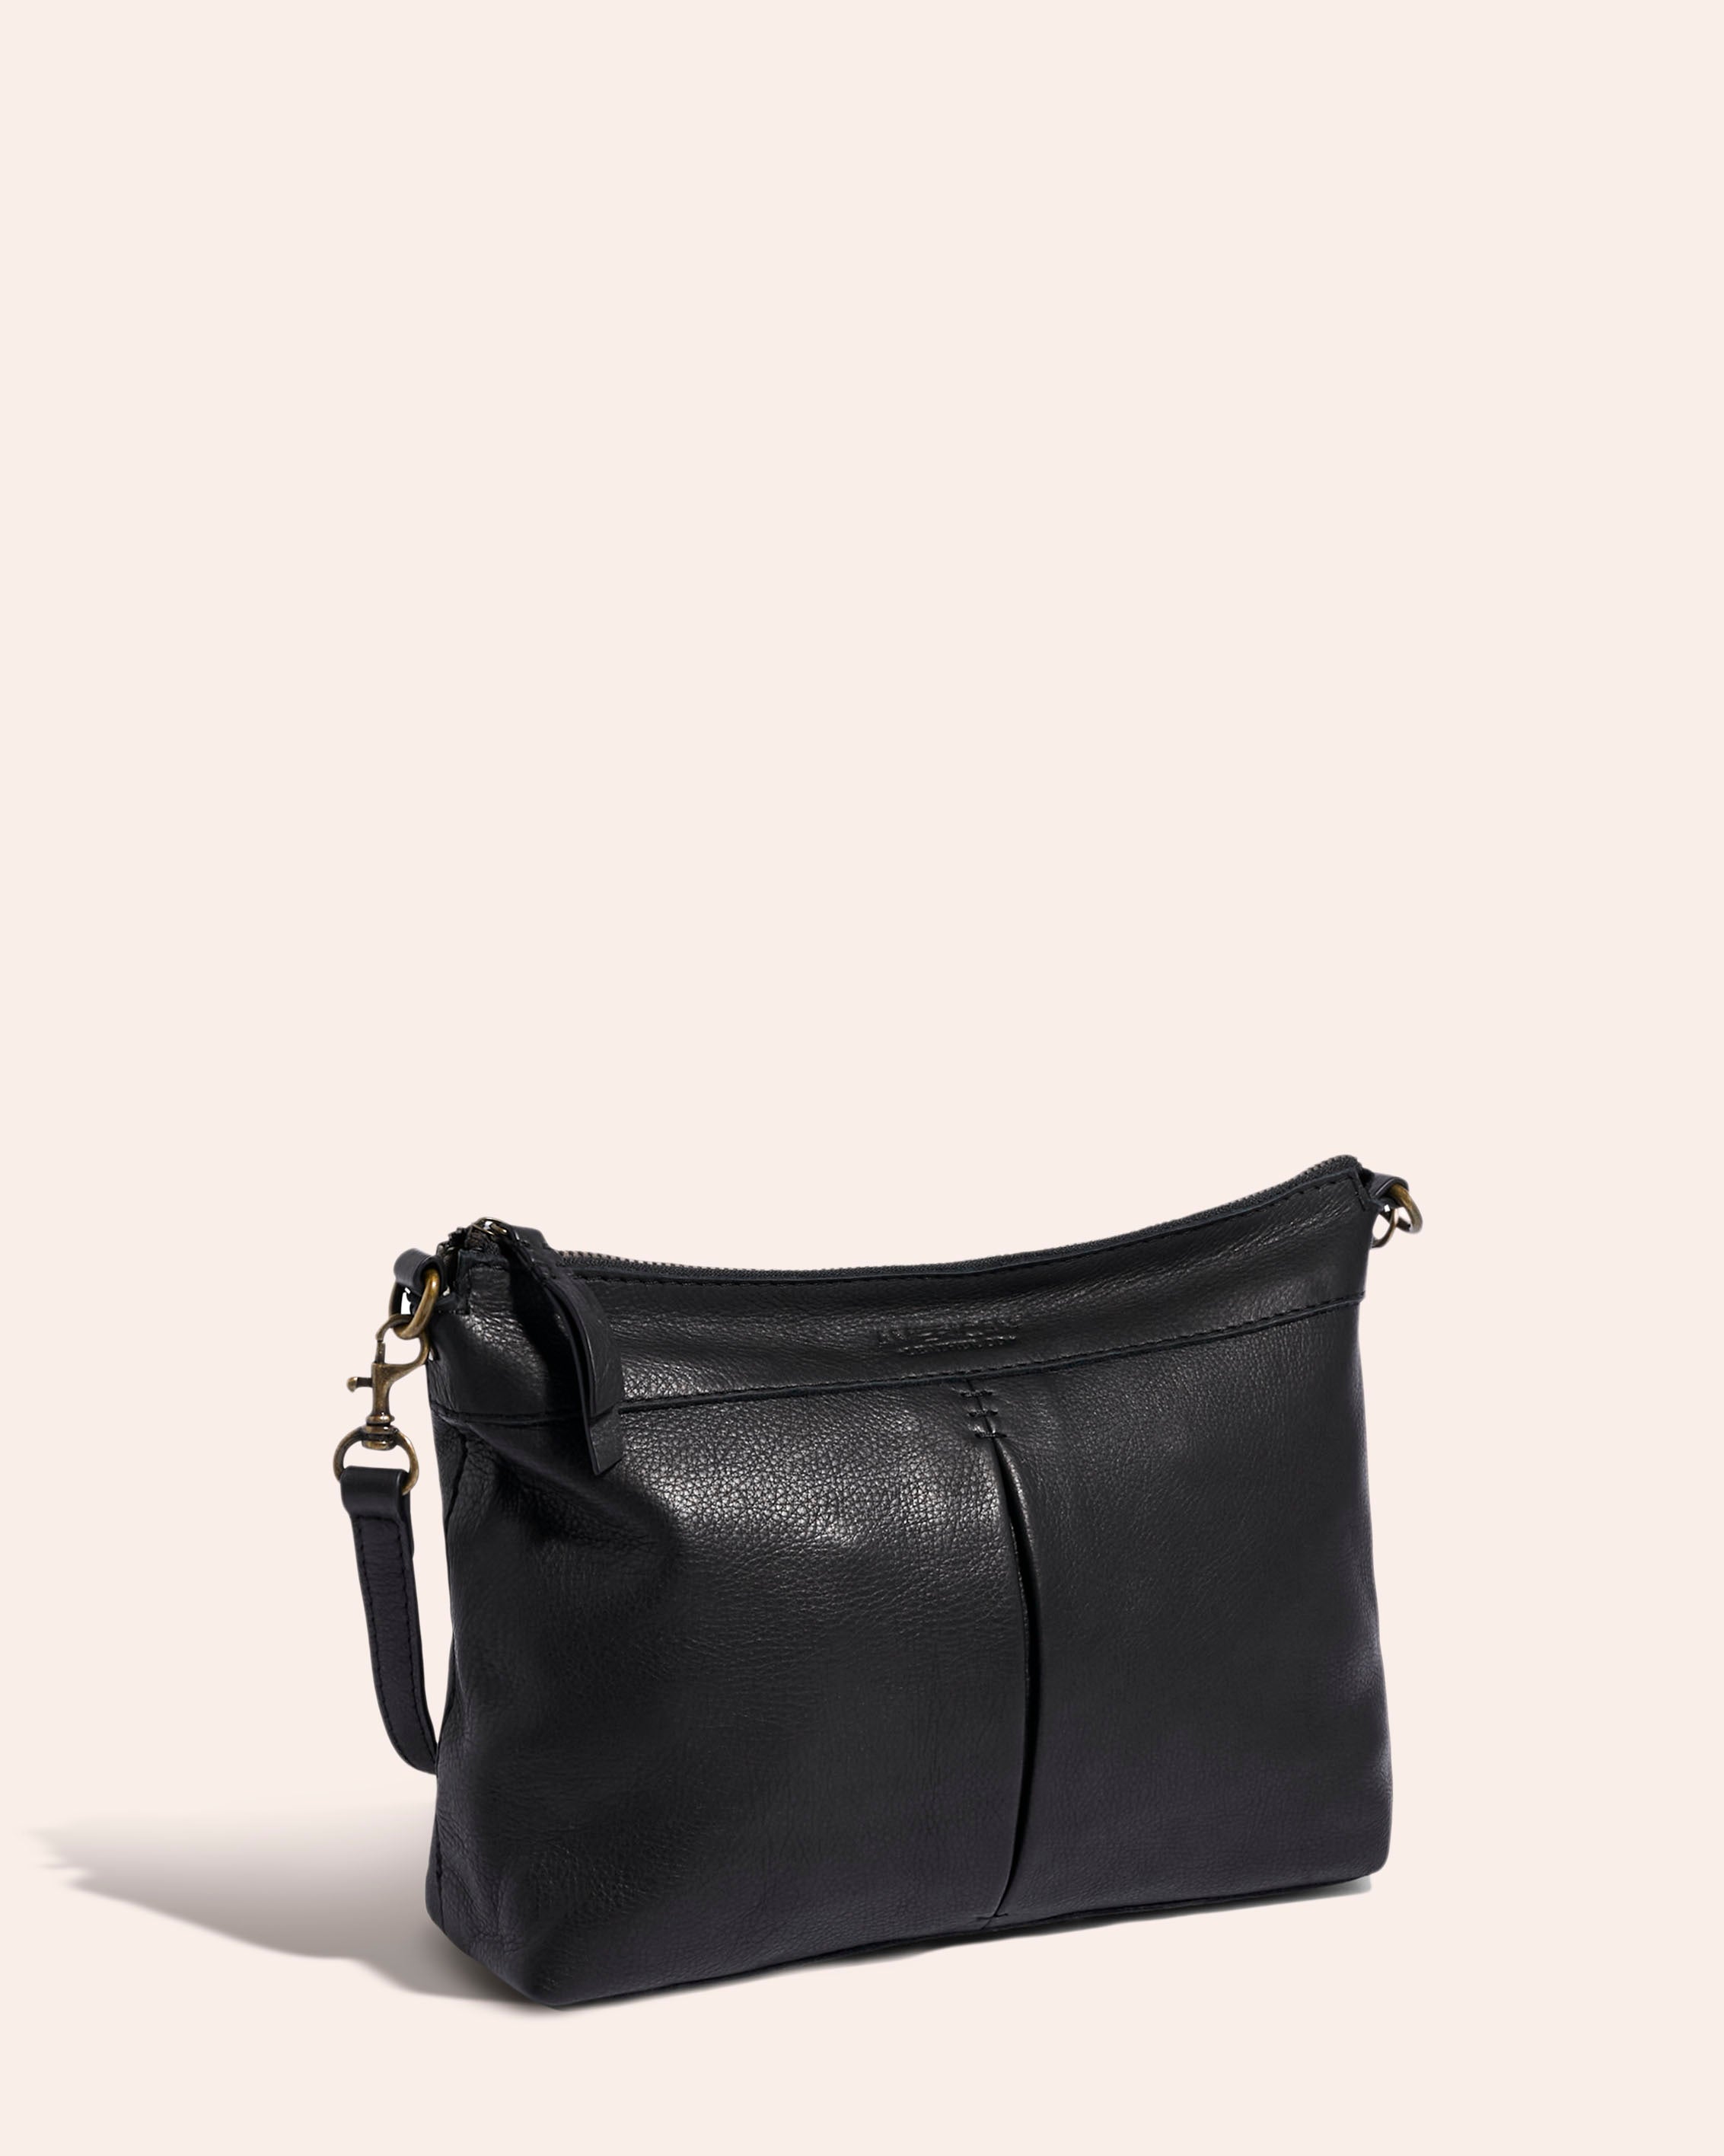 Fossil Women's Fiona Leather Top-Handle Bag Satchel - Black Floral